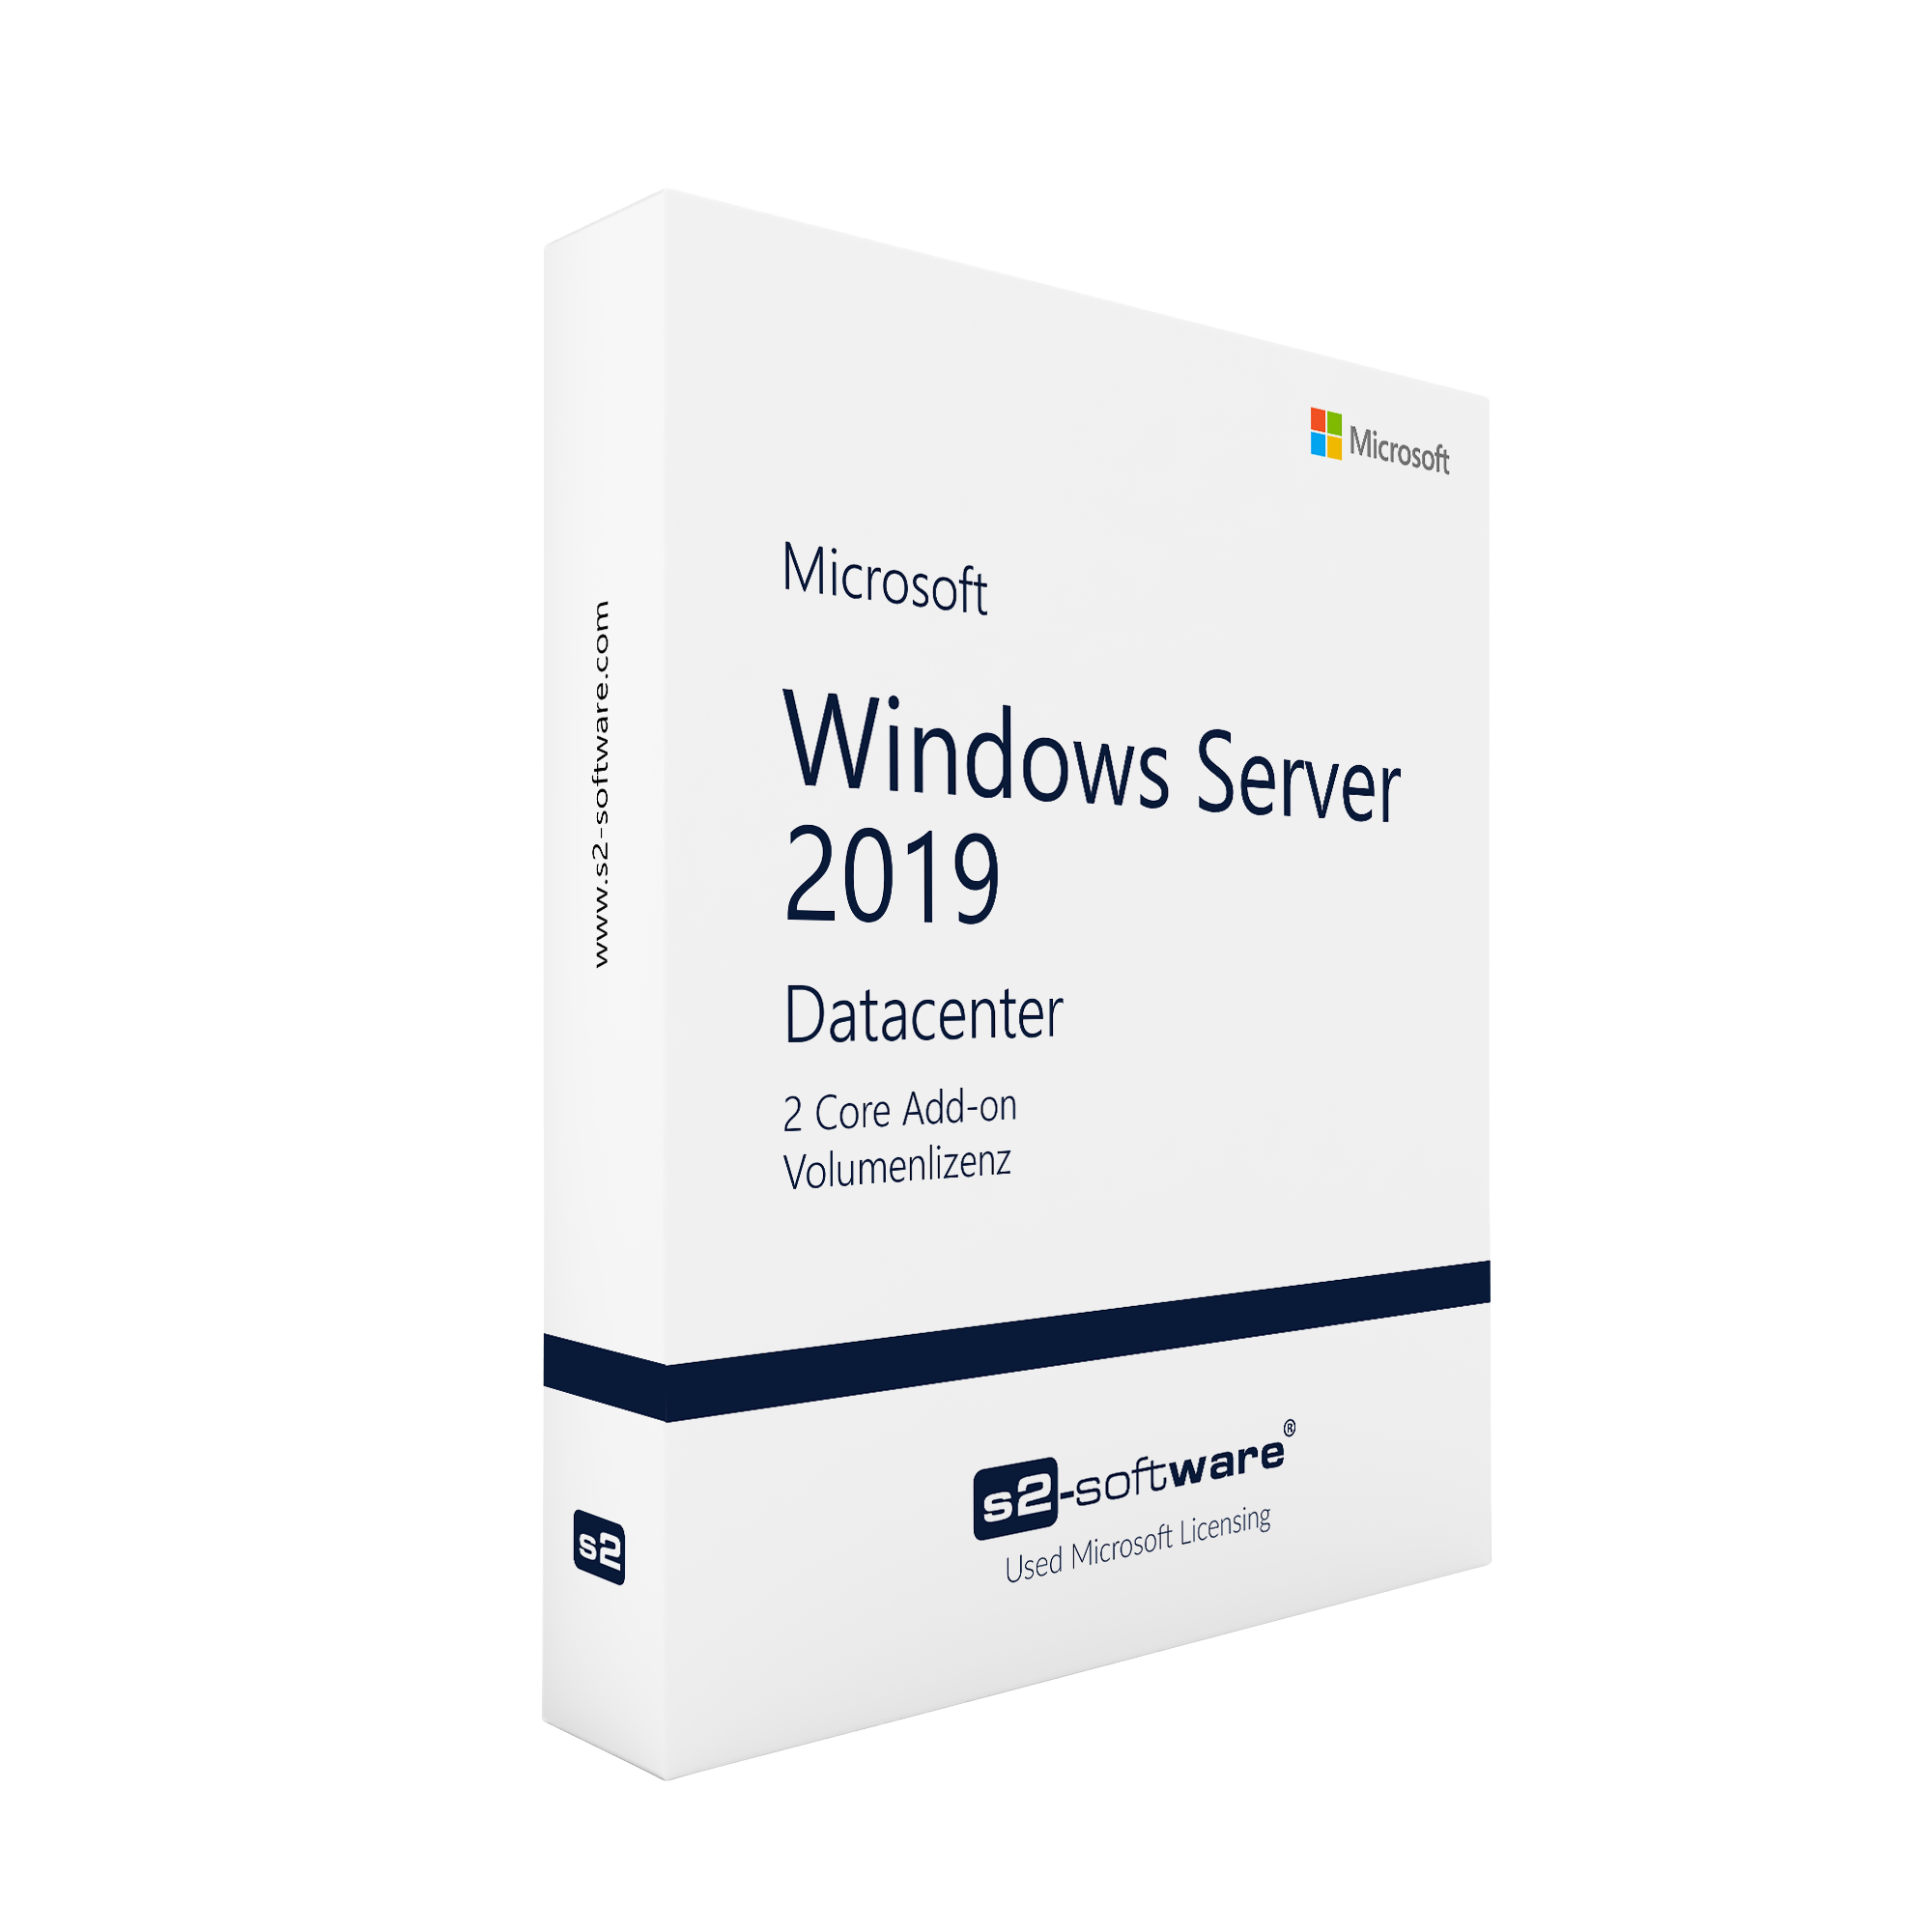 Windows Server 2019 Datacenter 2 Core Add-on